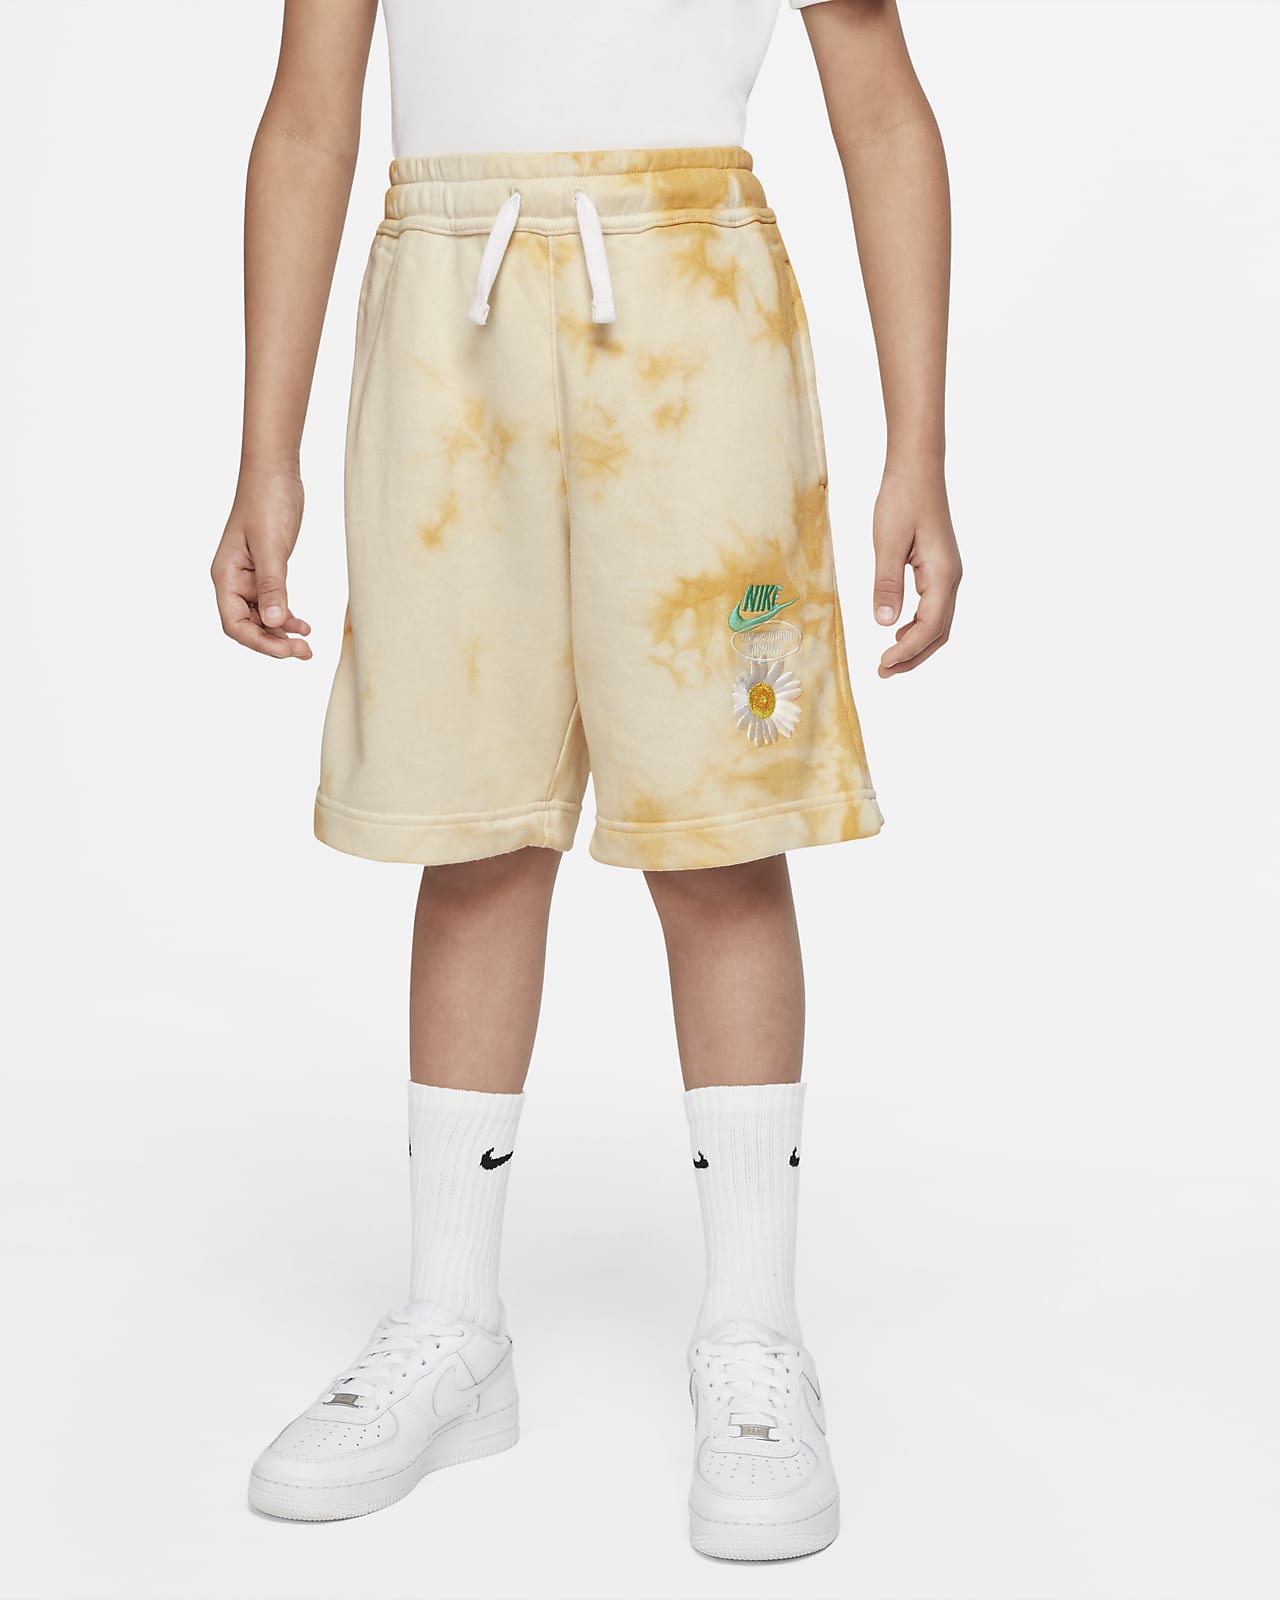 Nike Sportswear Older Kids' (Boys') French Terry Shorts